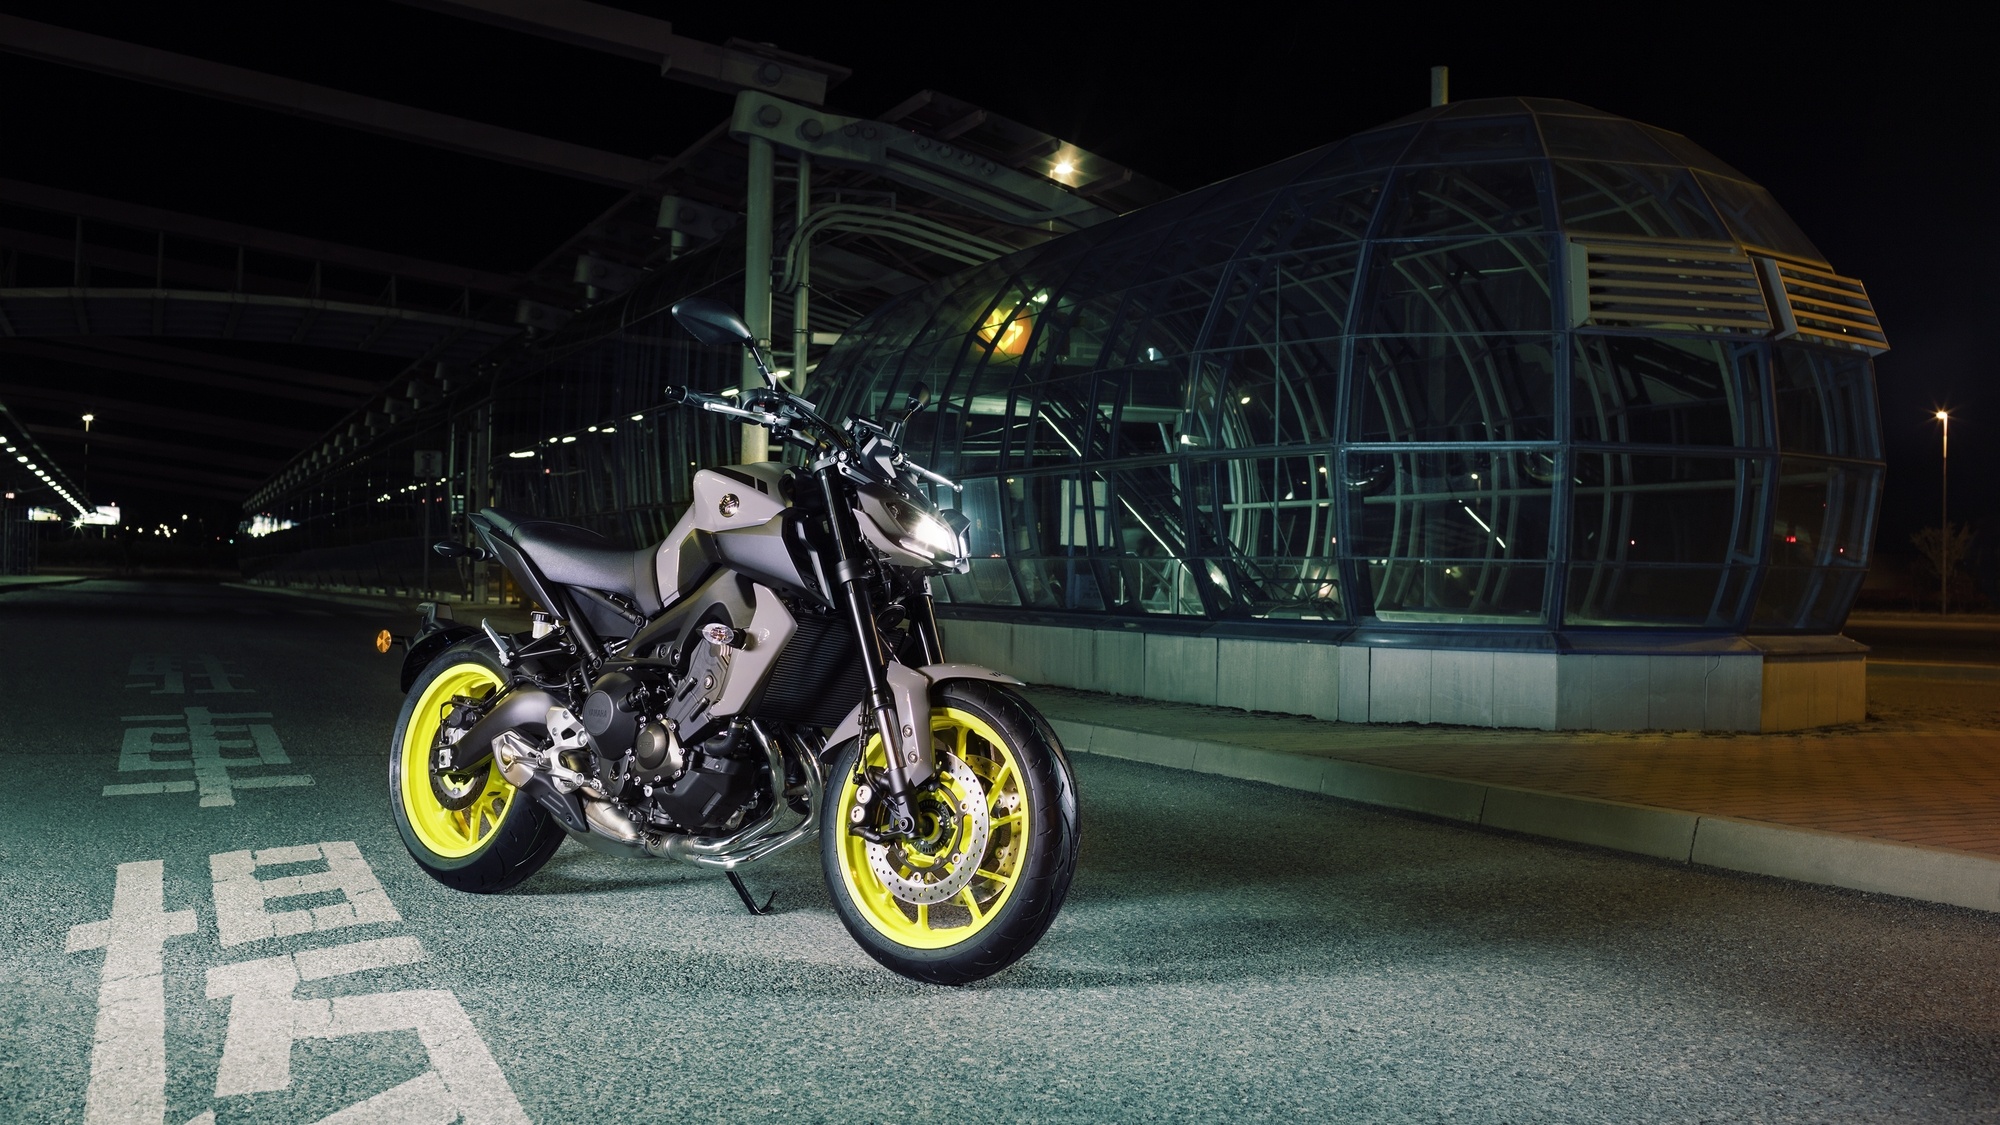 Yamaha MT-09, Vibrant wallpapers, Motorcycle photography, Stunning visuals, 2000x1130 HD Desktop